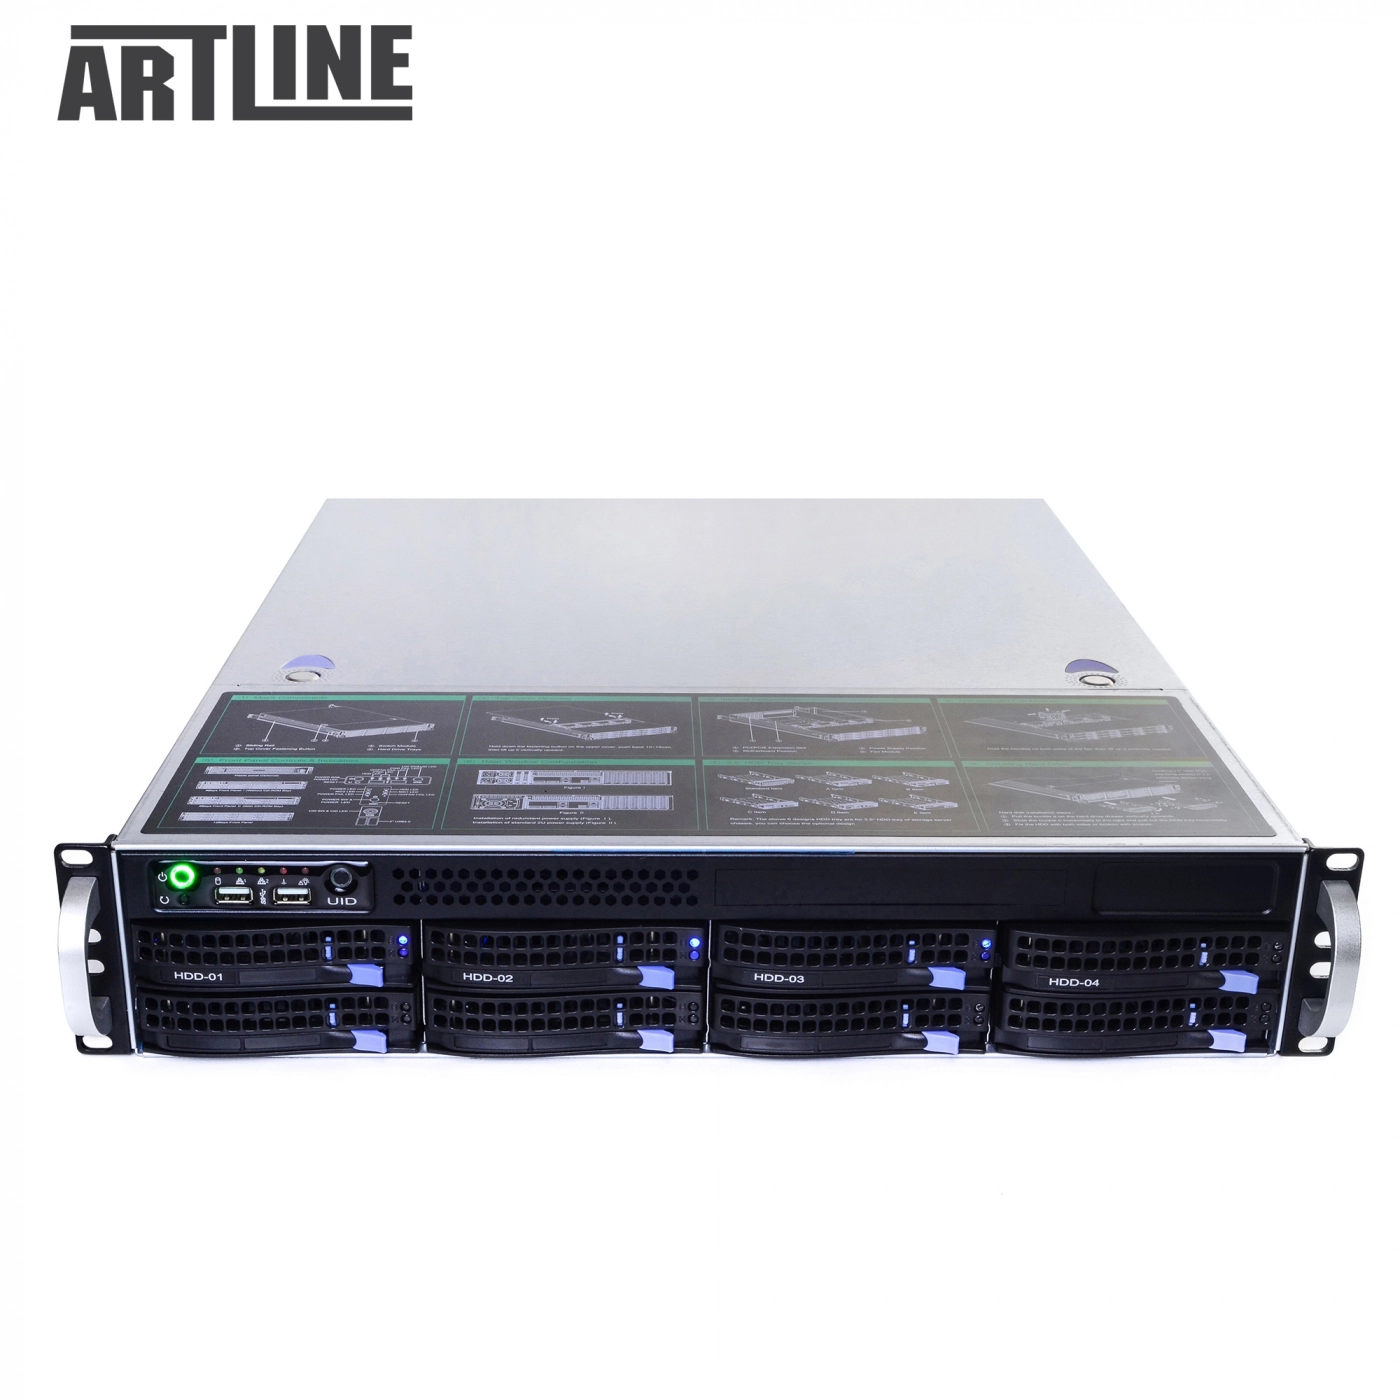 Купити Сервер ARTLINE Business R37v26 - фото 9